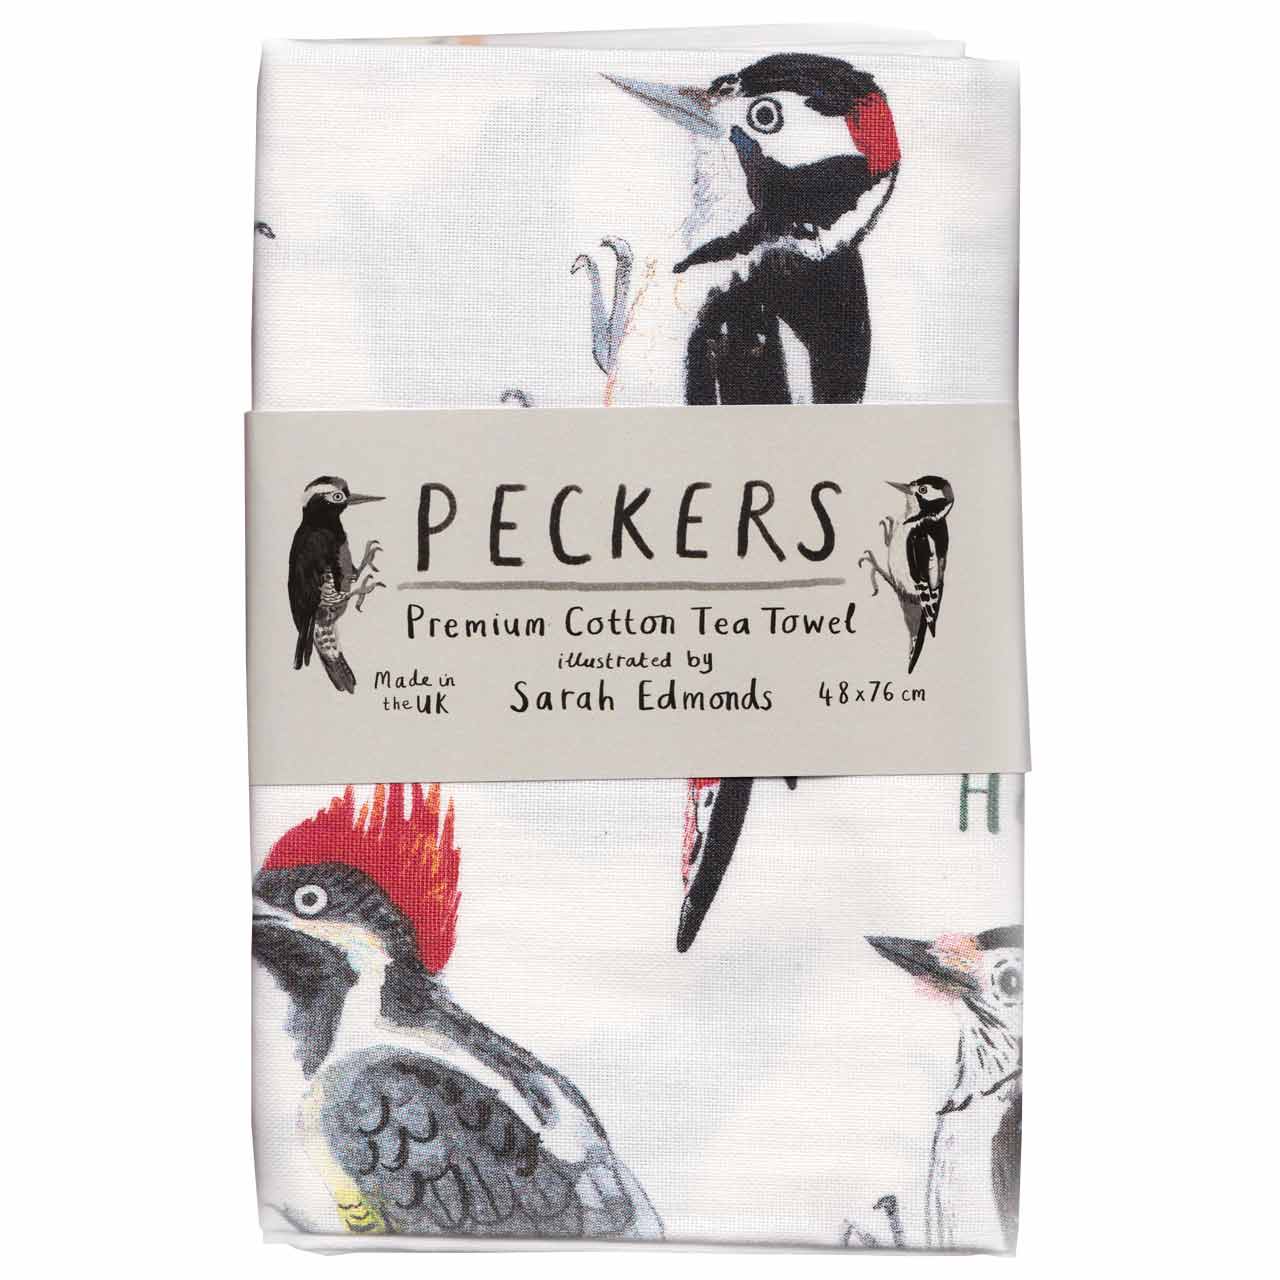 Peckers Premium Cotton Tea Towel